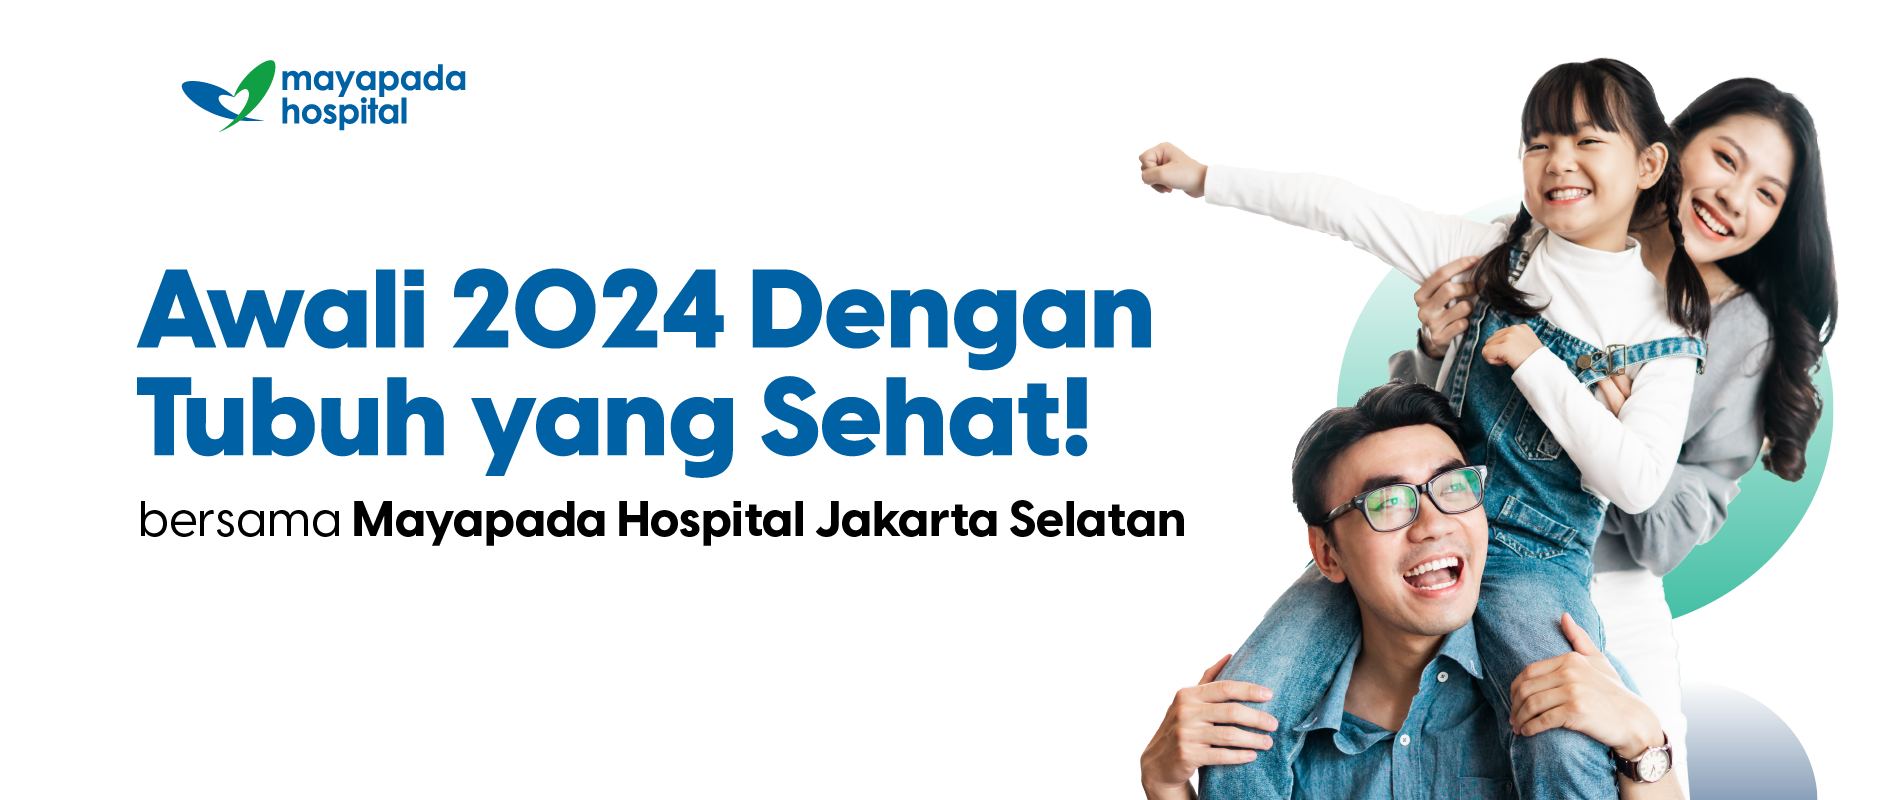 Promo Vaksin Mayapada Hospital Jakarta Selatan (MHJS) IMG